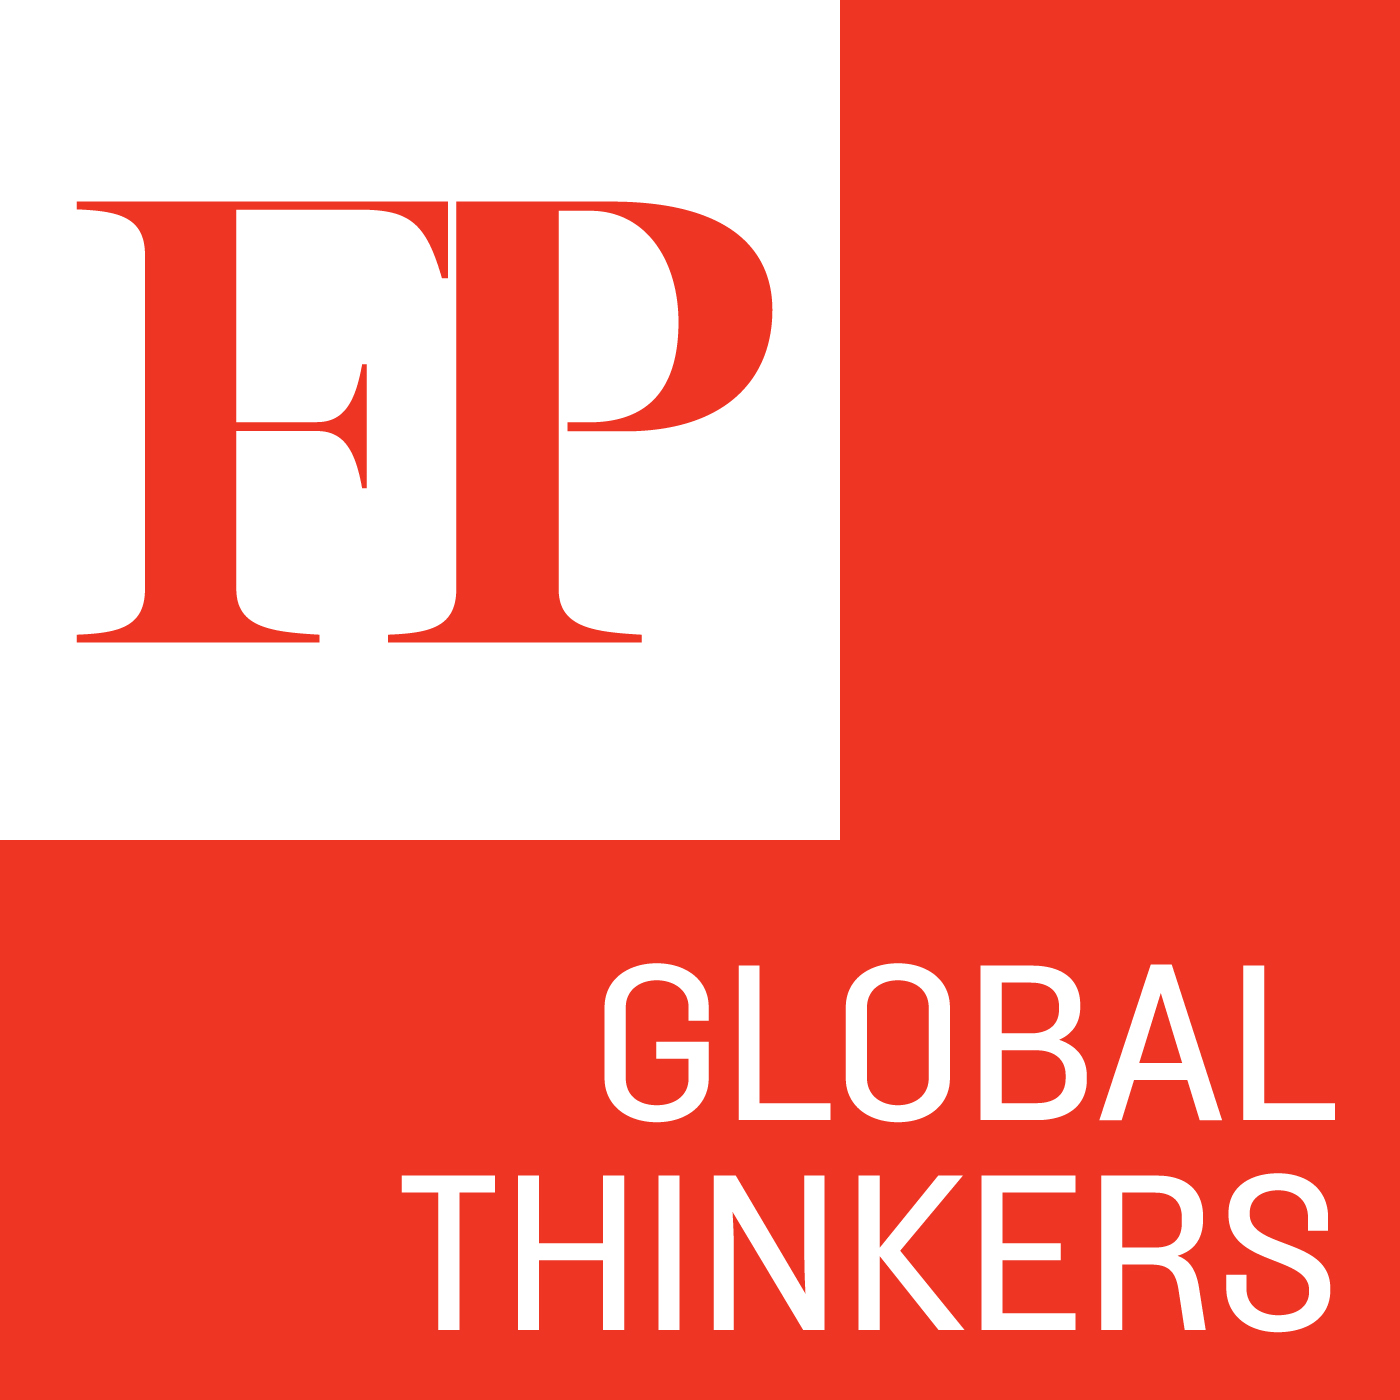 FP's Global Thinkers